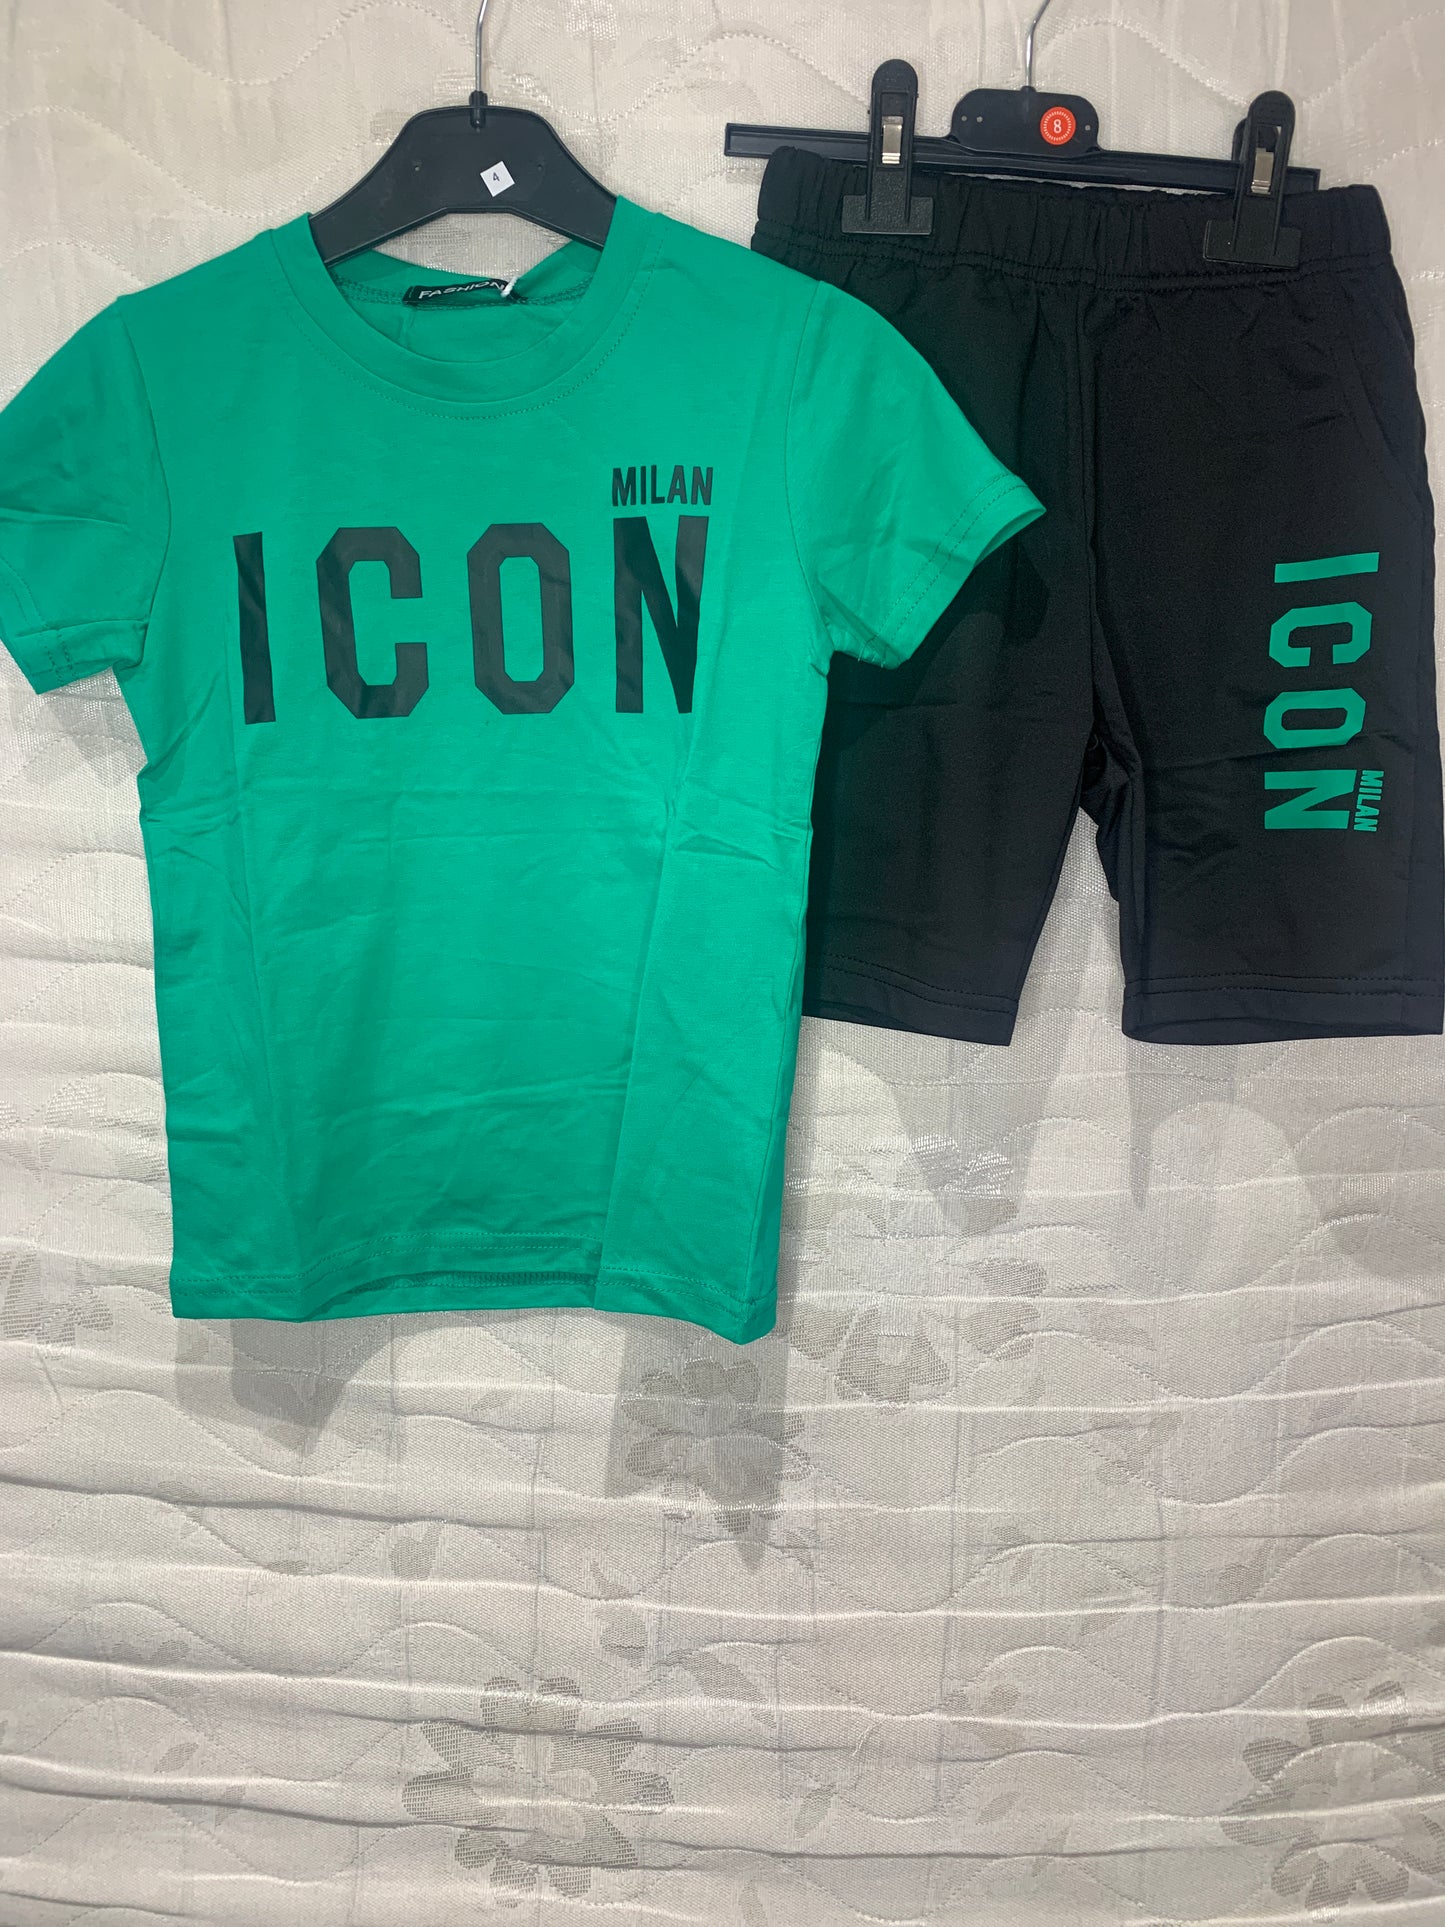 Unisex Boys Girls Tshirt & Shorts Sets Icn 2